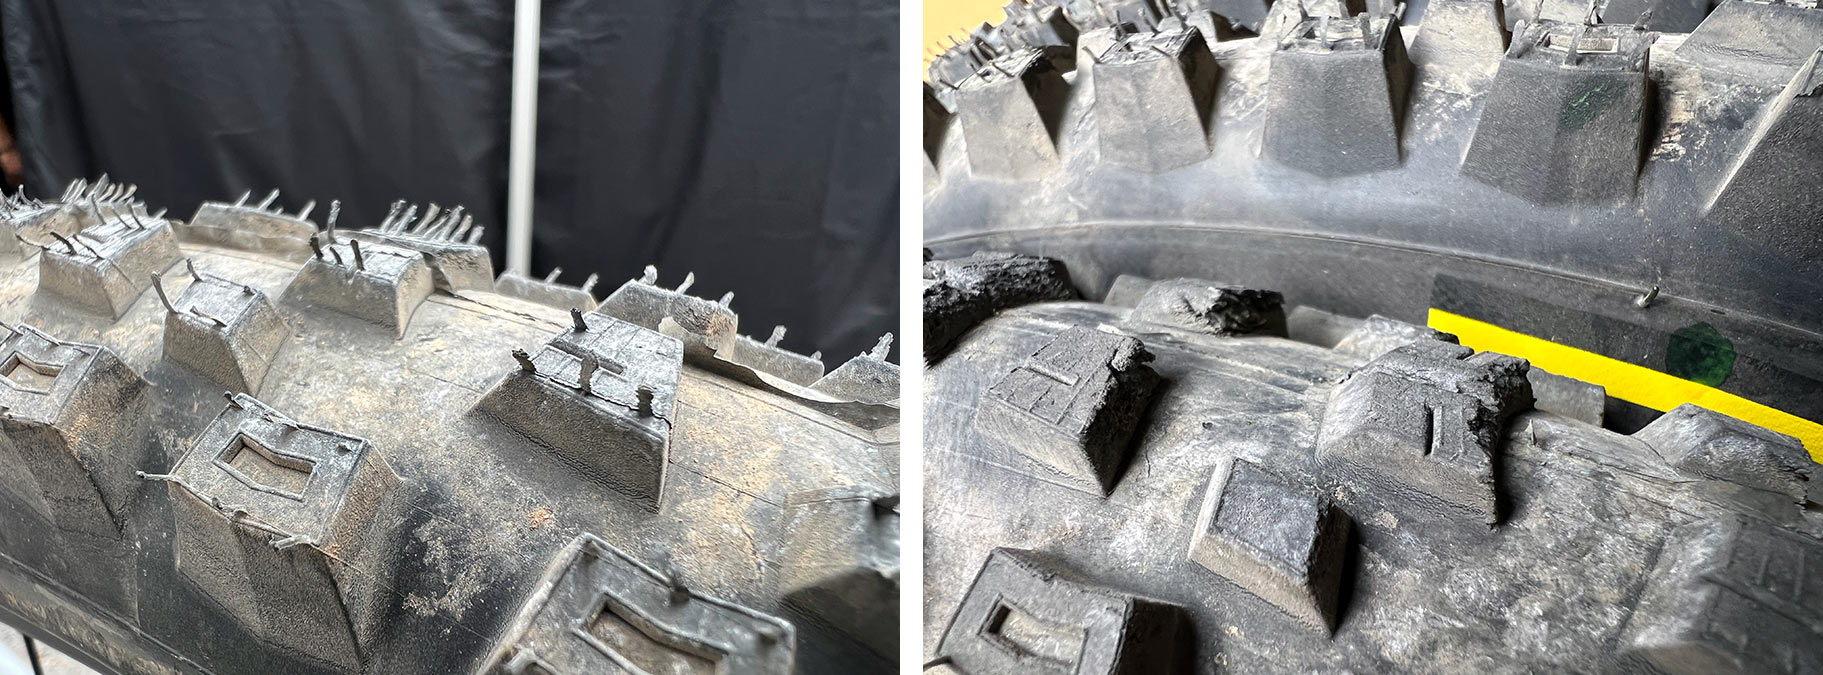 tread wear comparison between pirelli race EN and DH mountain bike tires